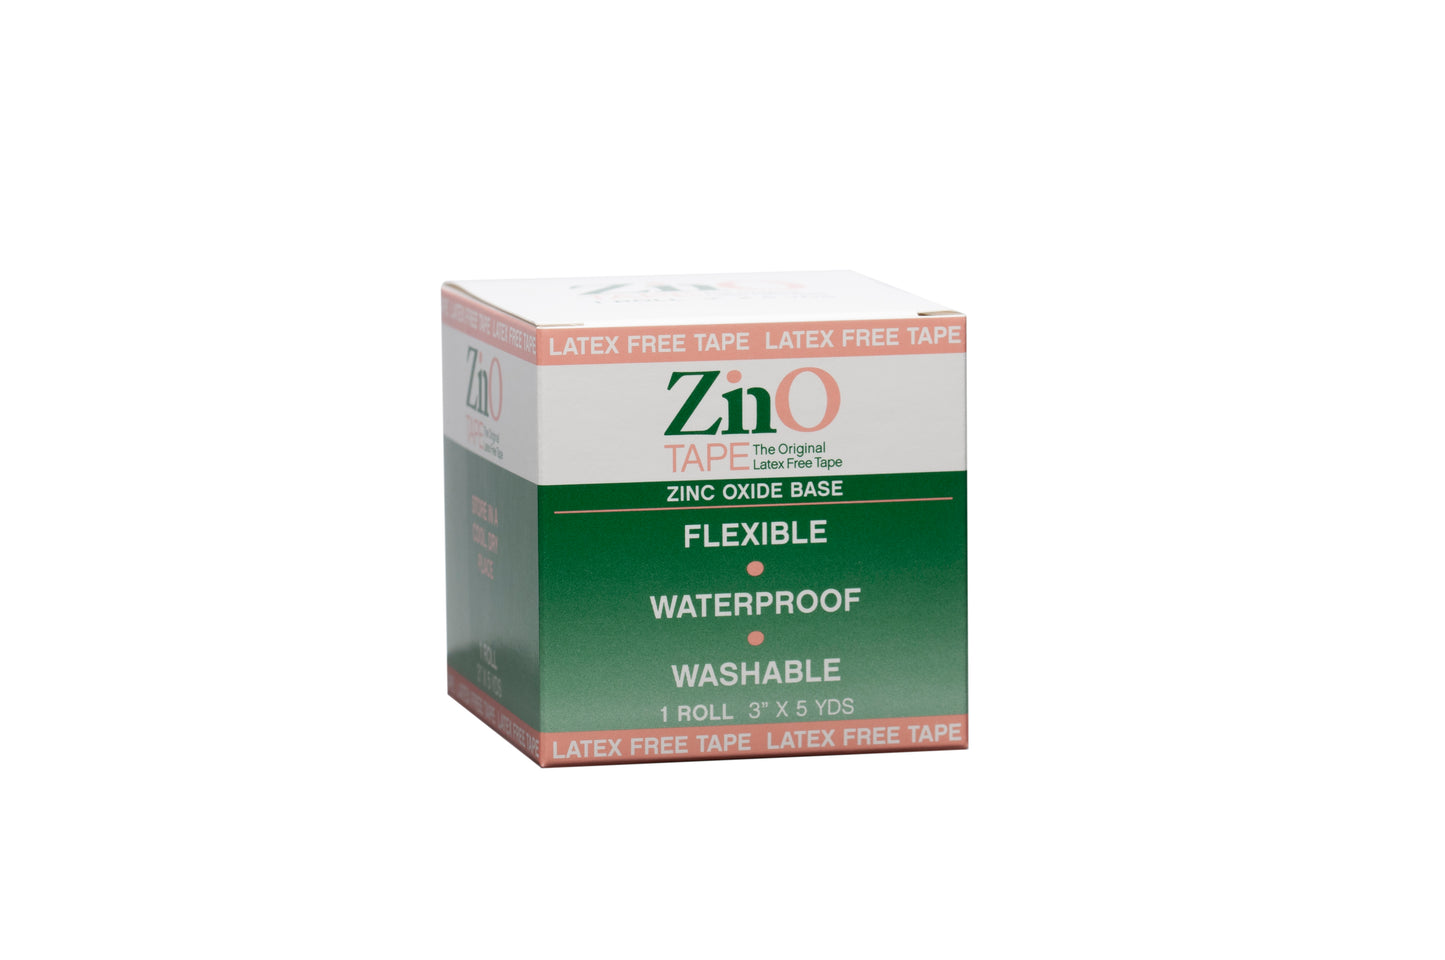 ZinO-Tape™: Zino Zinc Oxide Tape, 3" x 5 yds – 3 rolls per master box